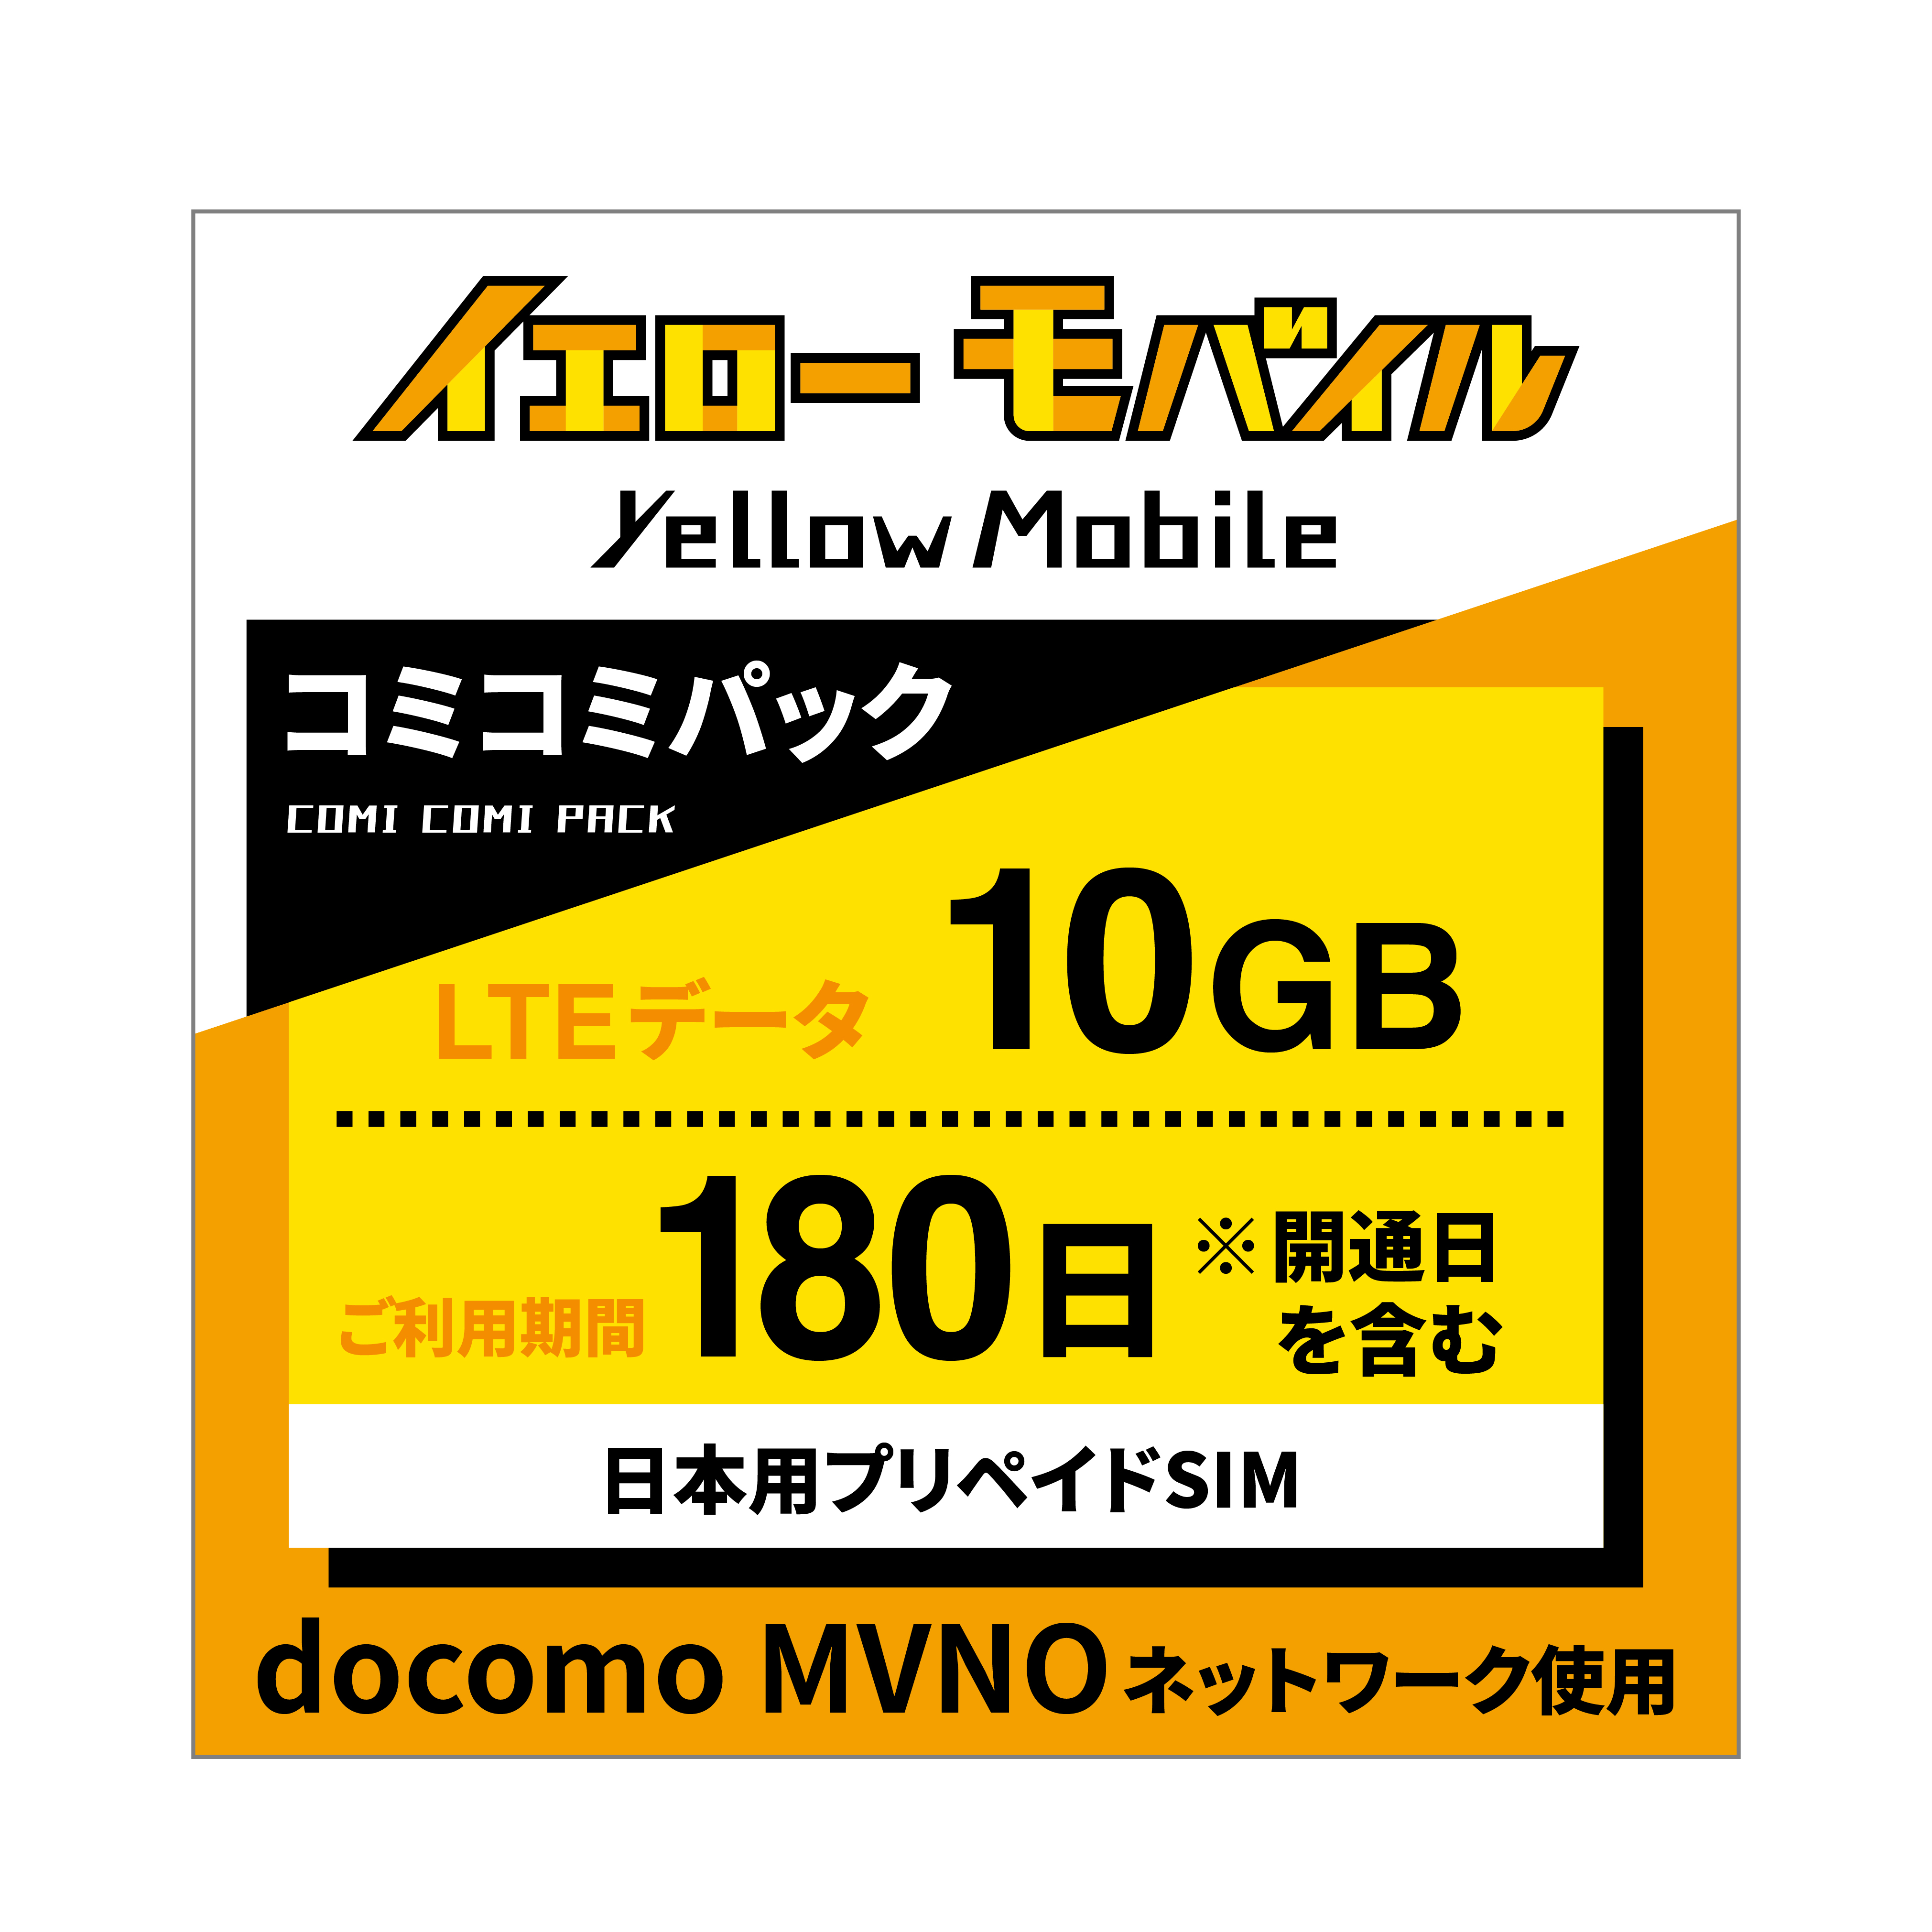  Japan domestic data exclusive use SIM comicomi pack docomo MVNO circuit 180 day 10GB